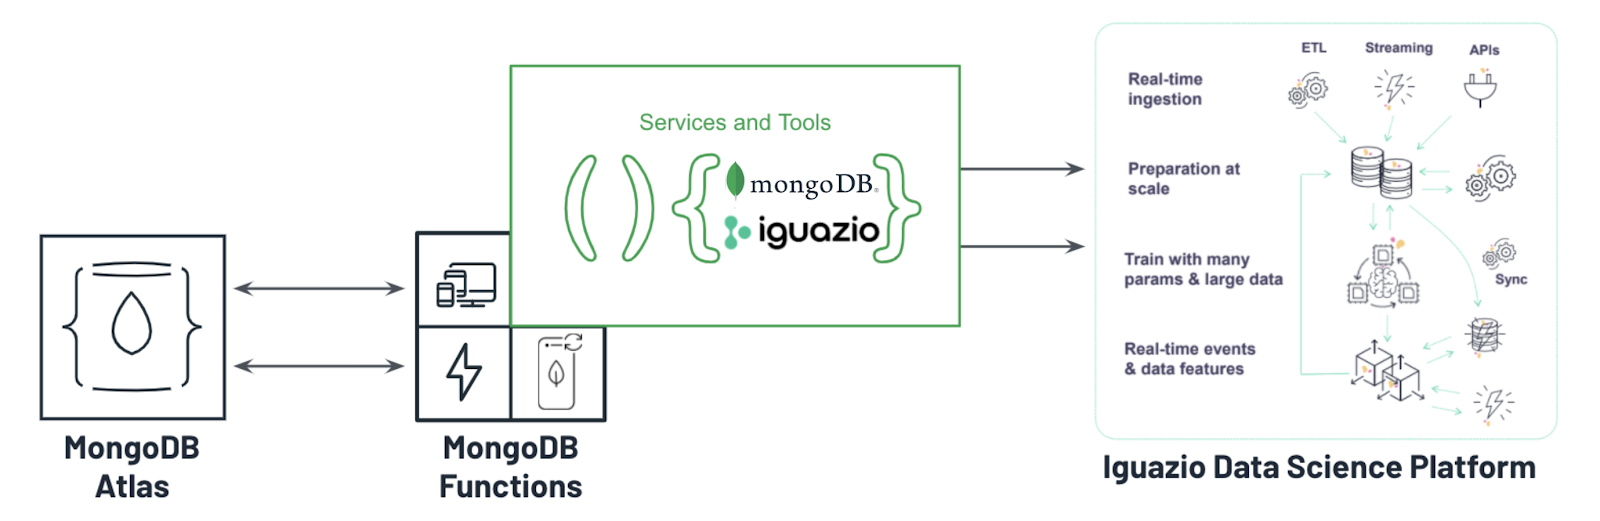 Iguazio and MongoDB data science platform